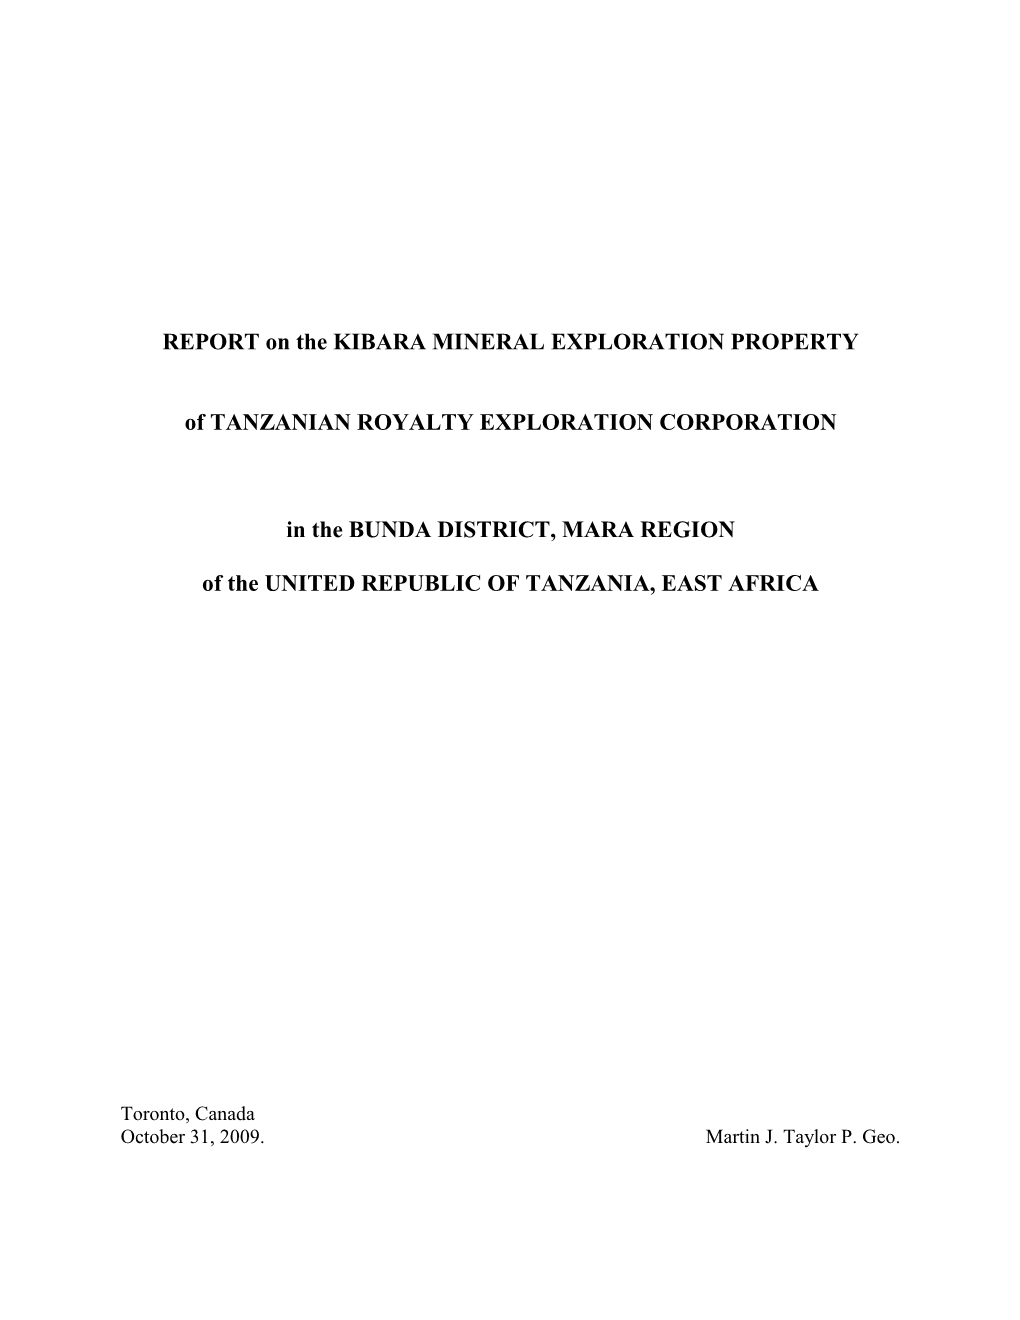 Report on the Kibara Mineral Exploration Property of Tanzanian Royalty I